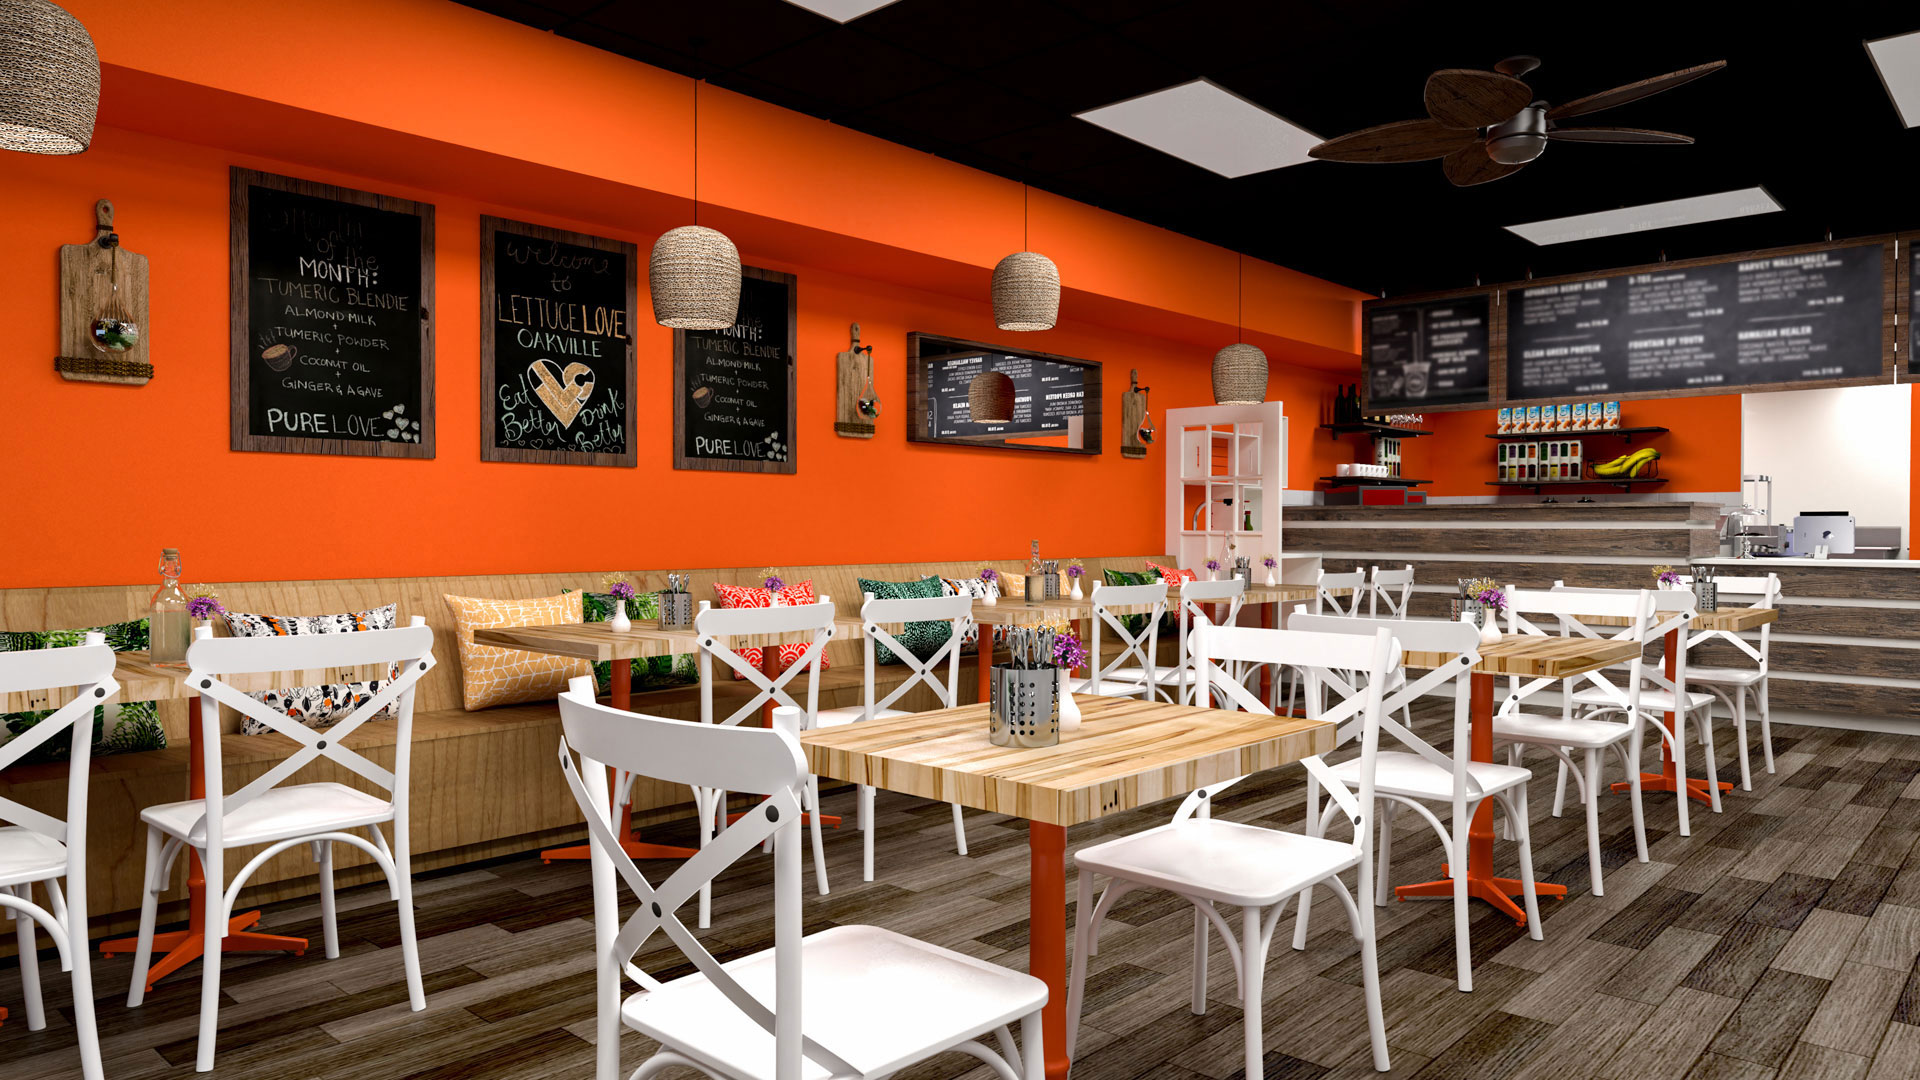 Lettuce Love Cafe Oakville - 3D rendering by Unfold Creative Studio Ltd.